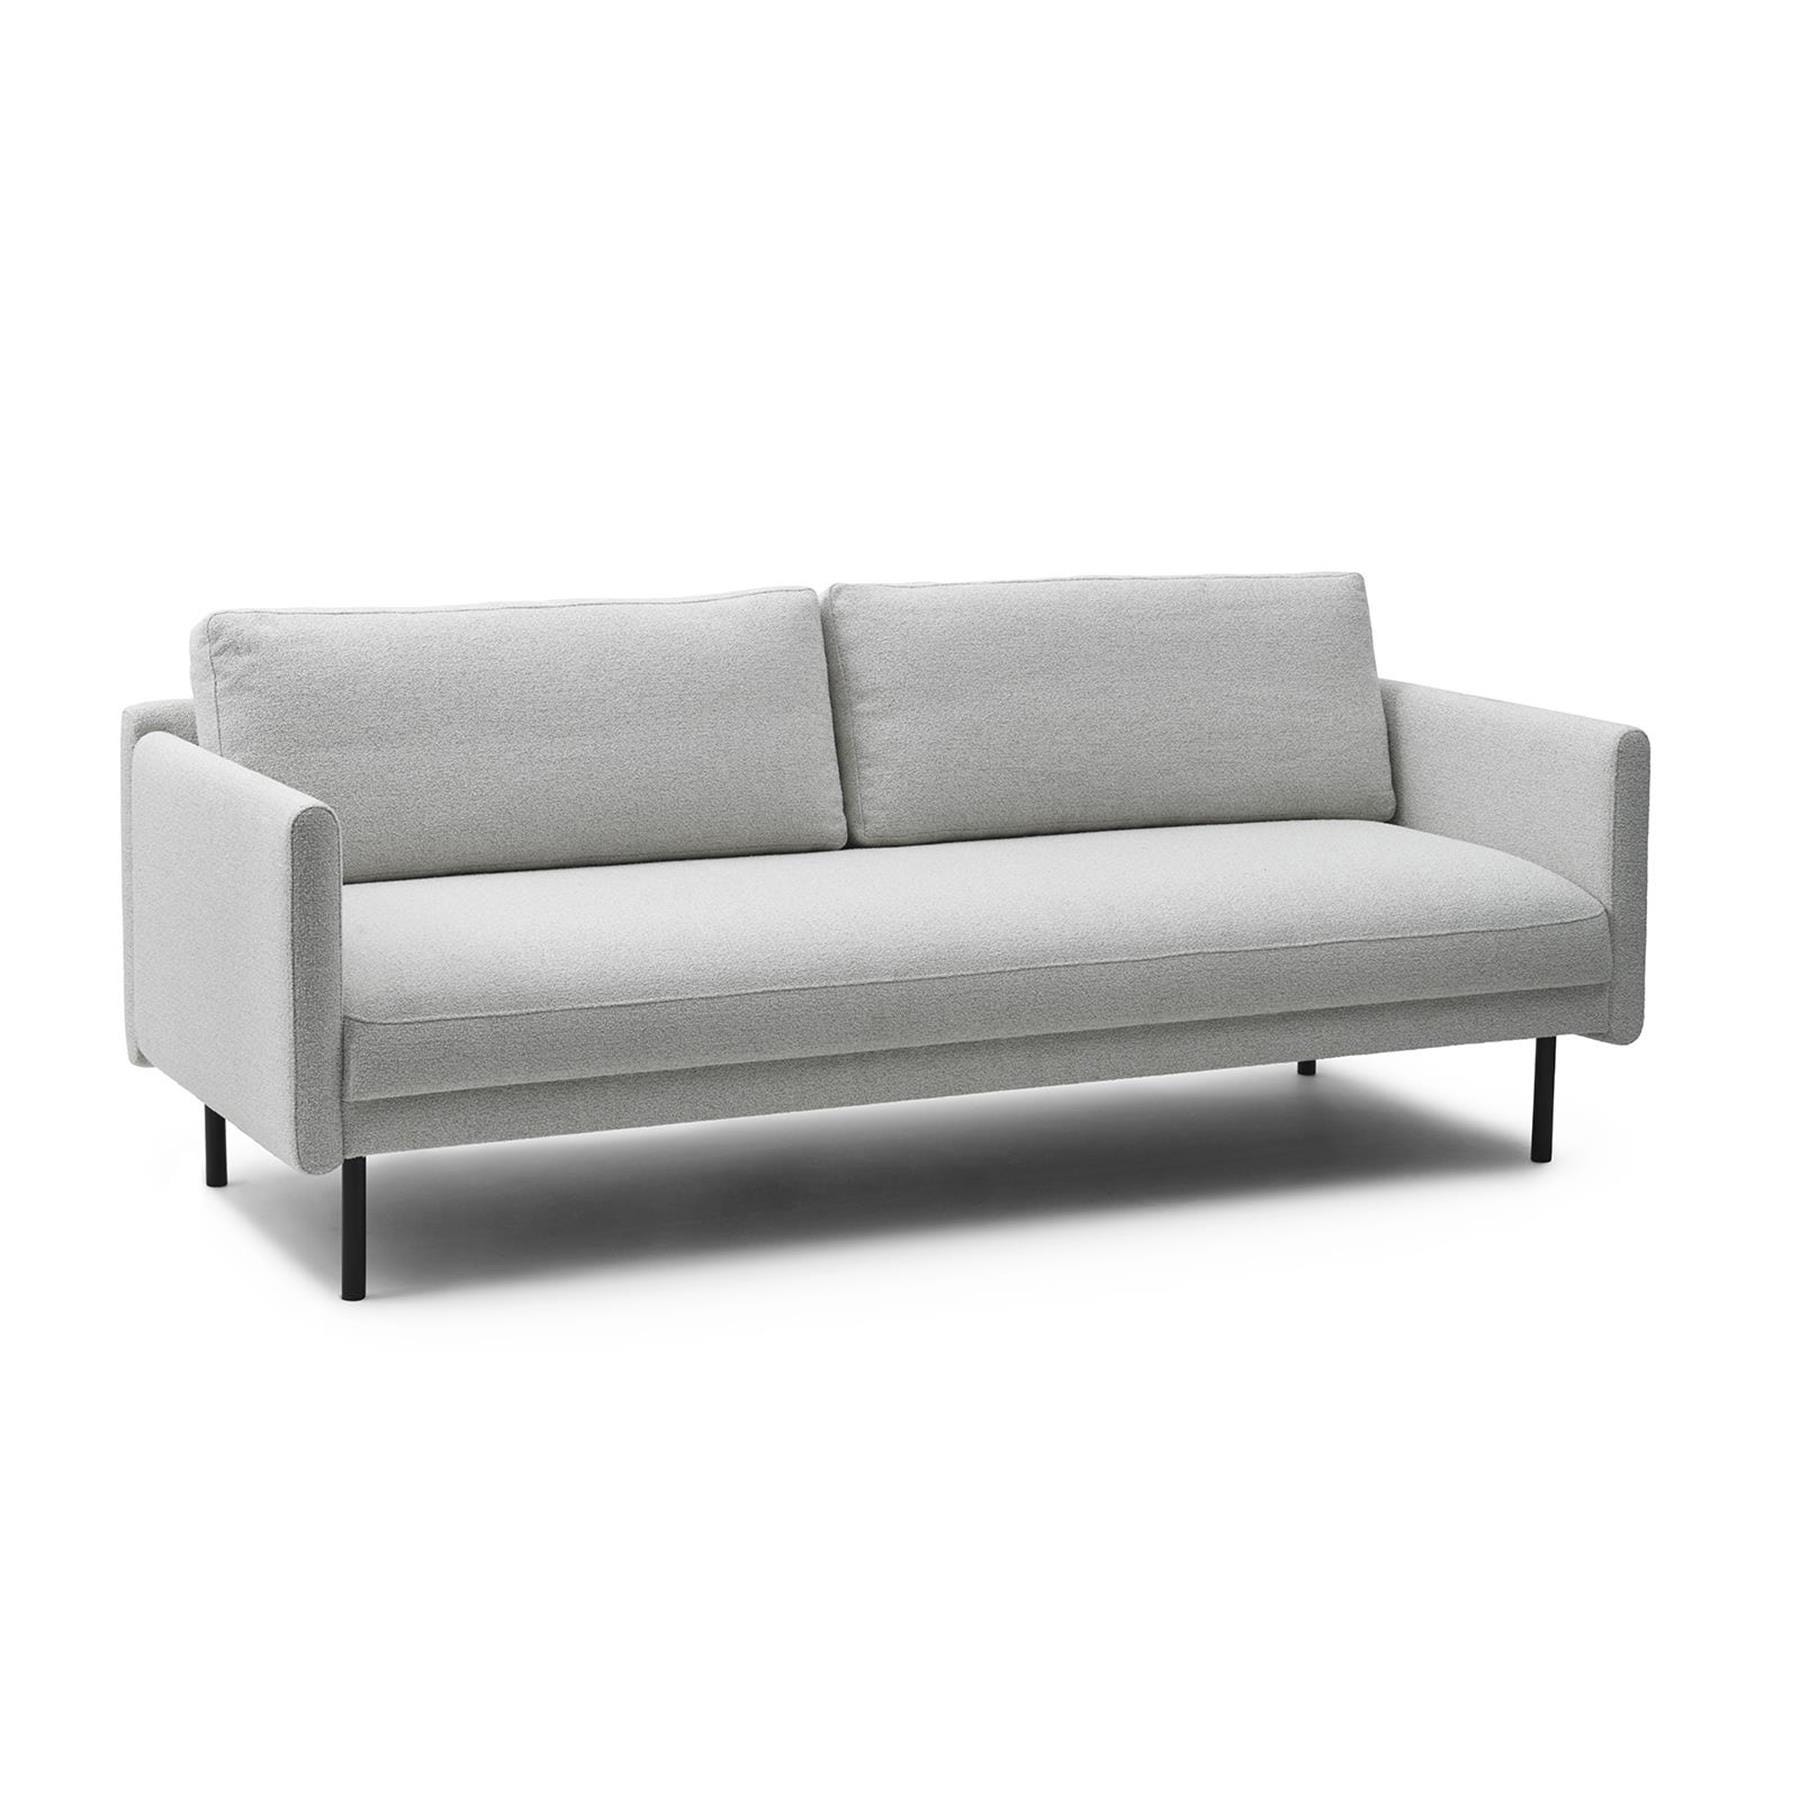 Normann Copenhagen Rar 3 Seater Sofa Venezia Off White Designer Furniture From Holloways Of Ludlow